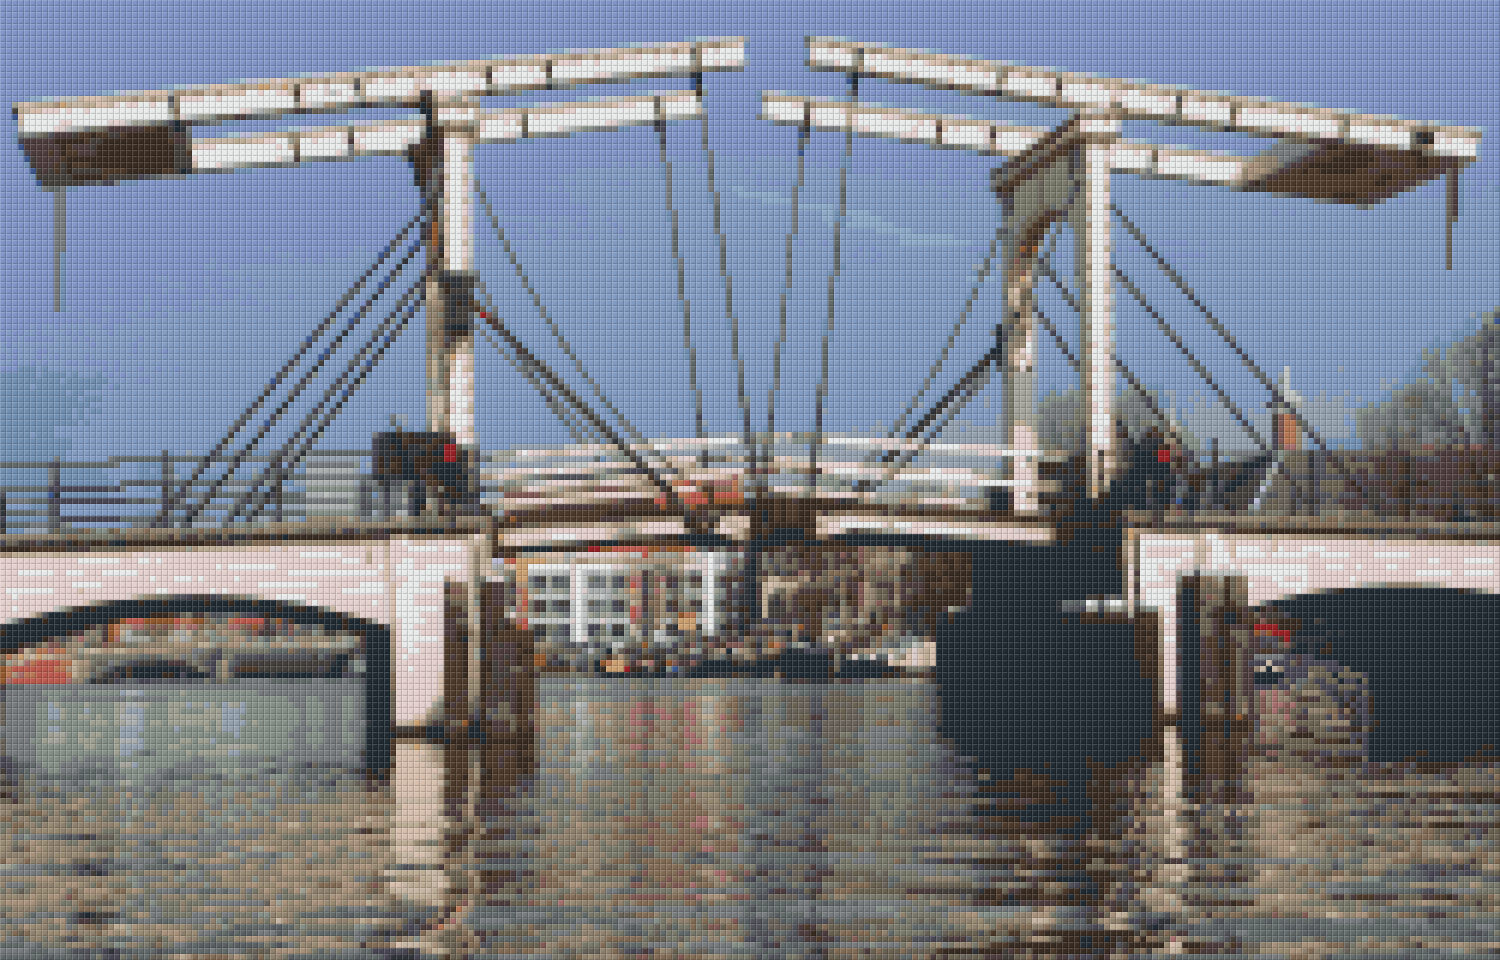 Pixelhobby Classic Set - Bridge in Amsterdam